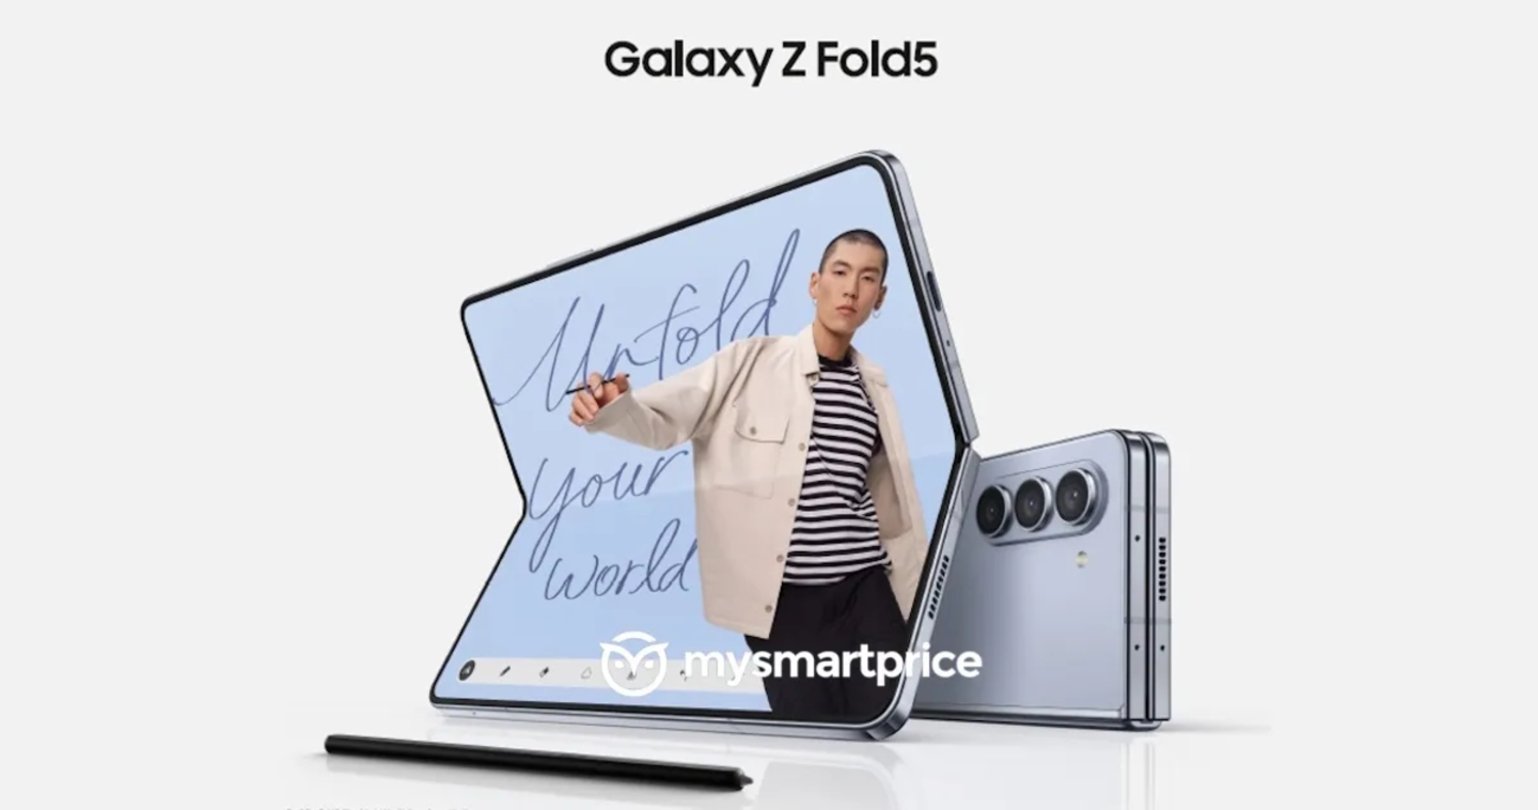 Galaxy Z Fold5 imagen prensa